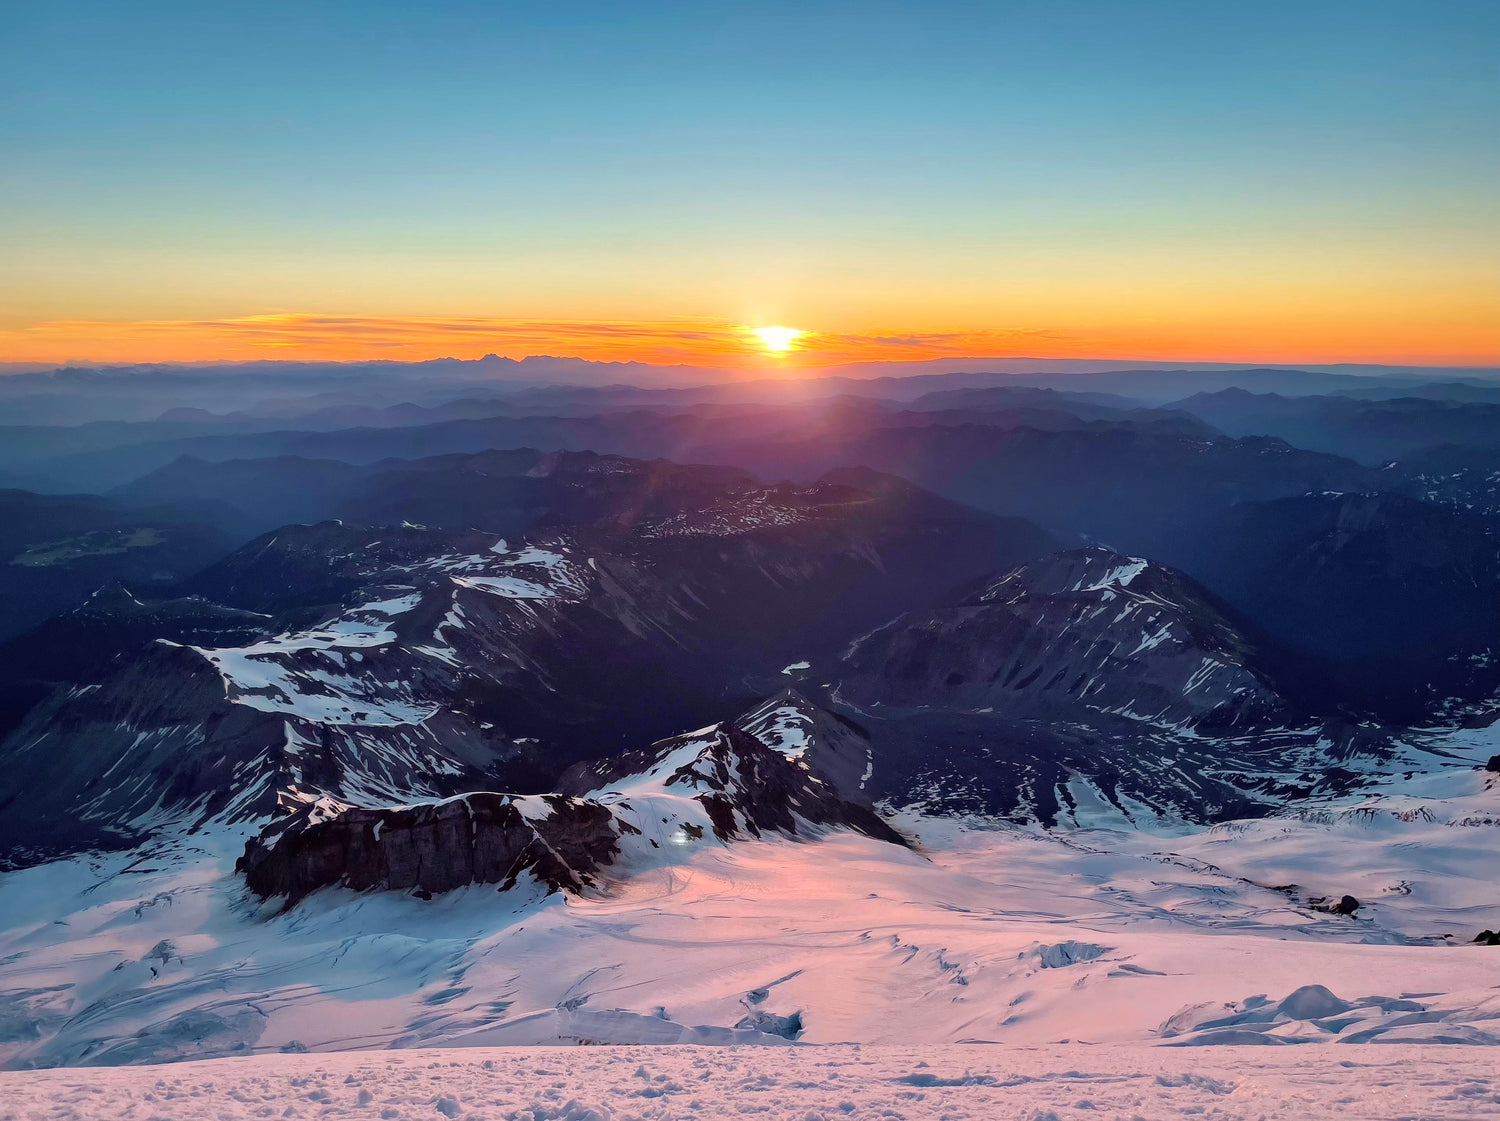 a classic stunning sunrise over the Emmons glacier on mount rainier